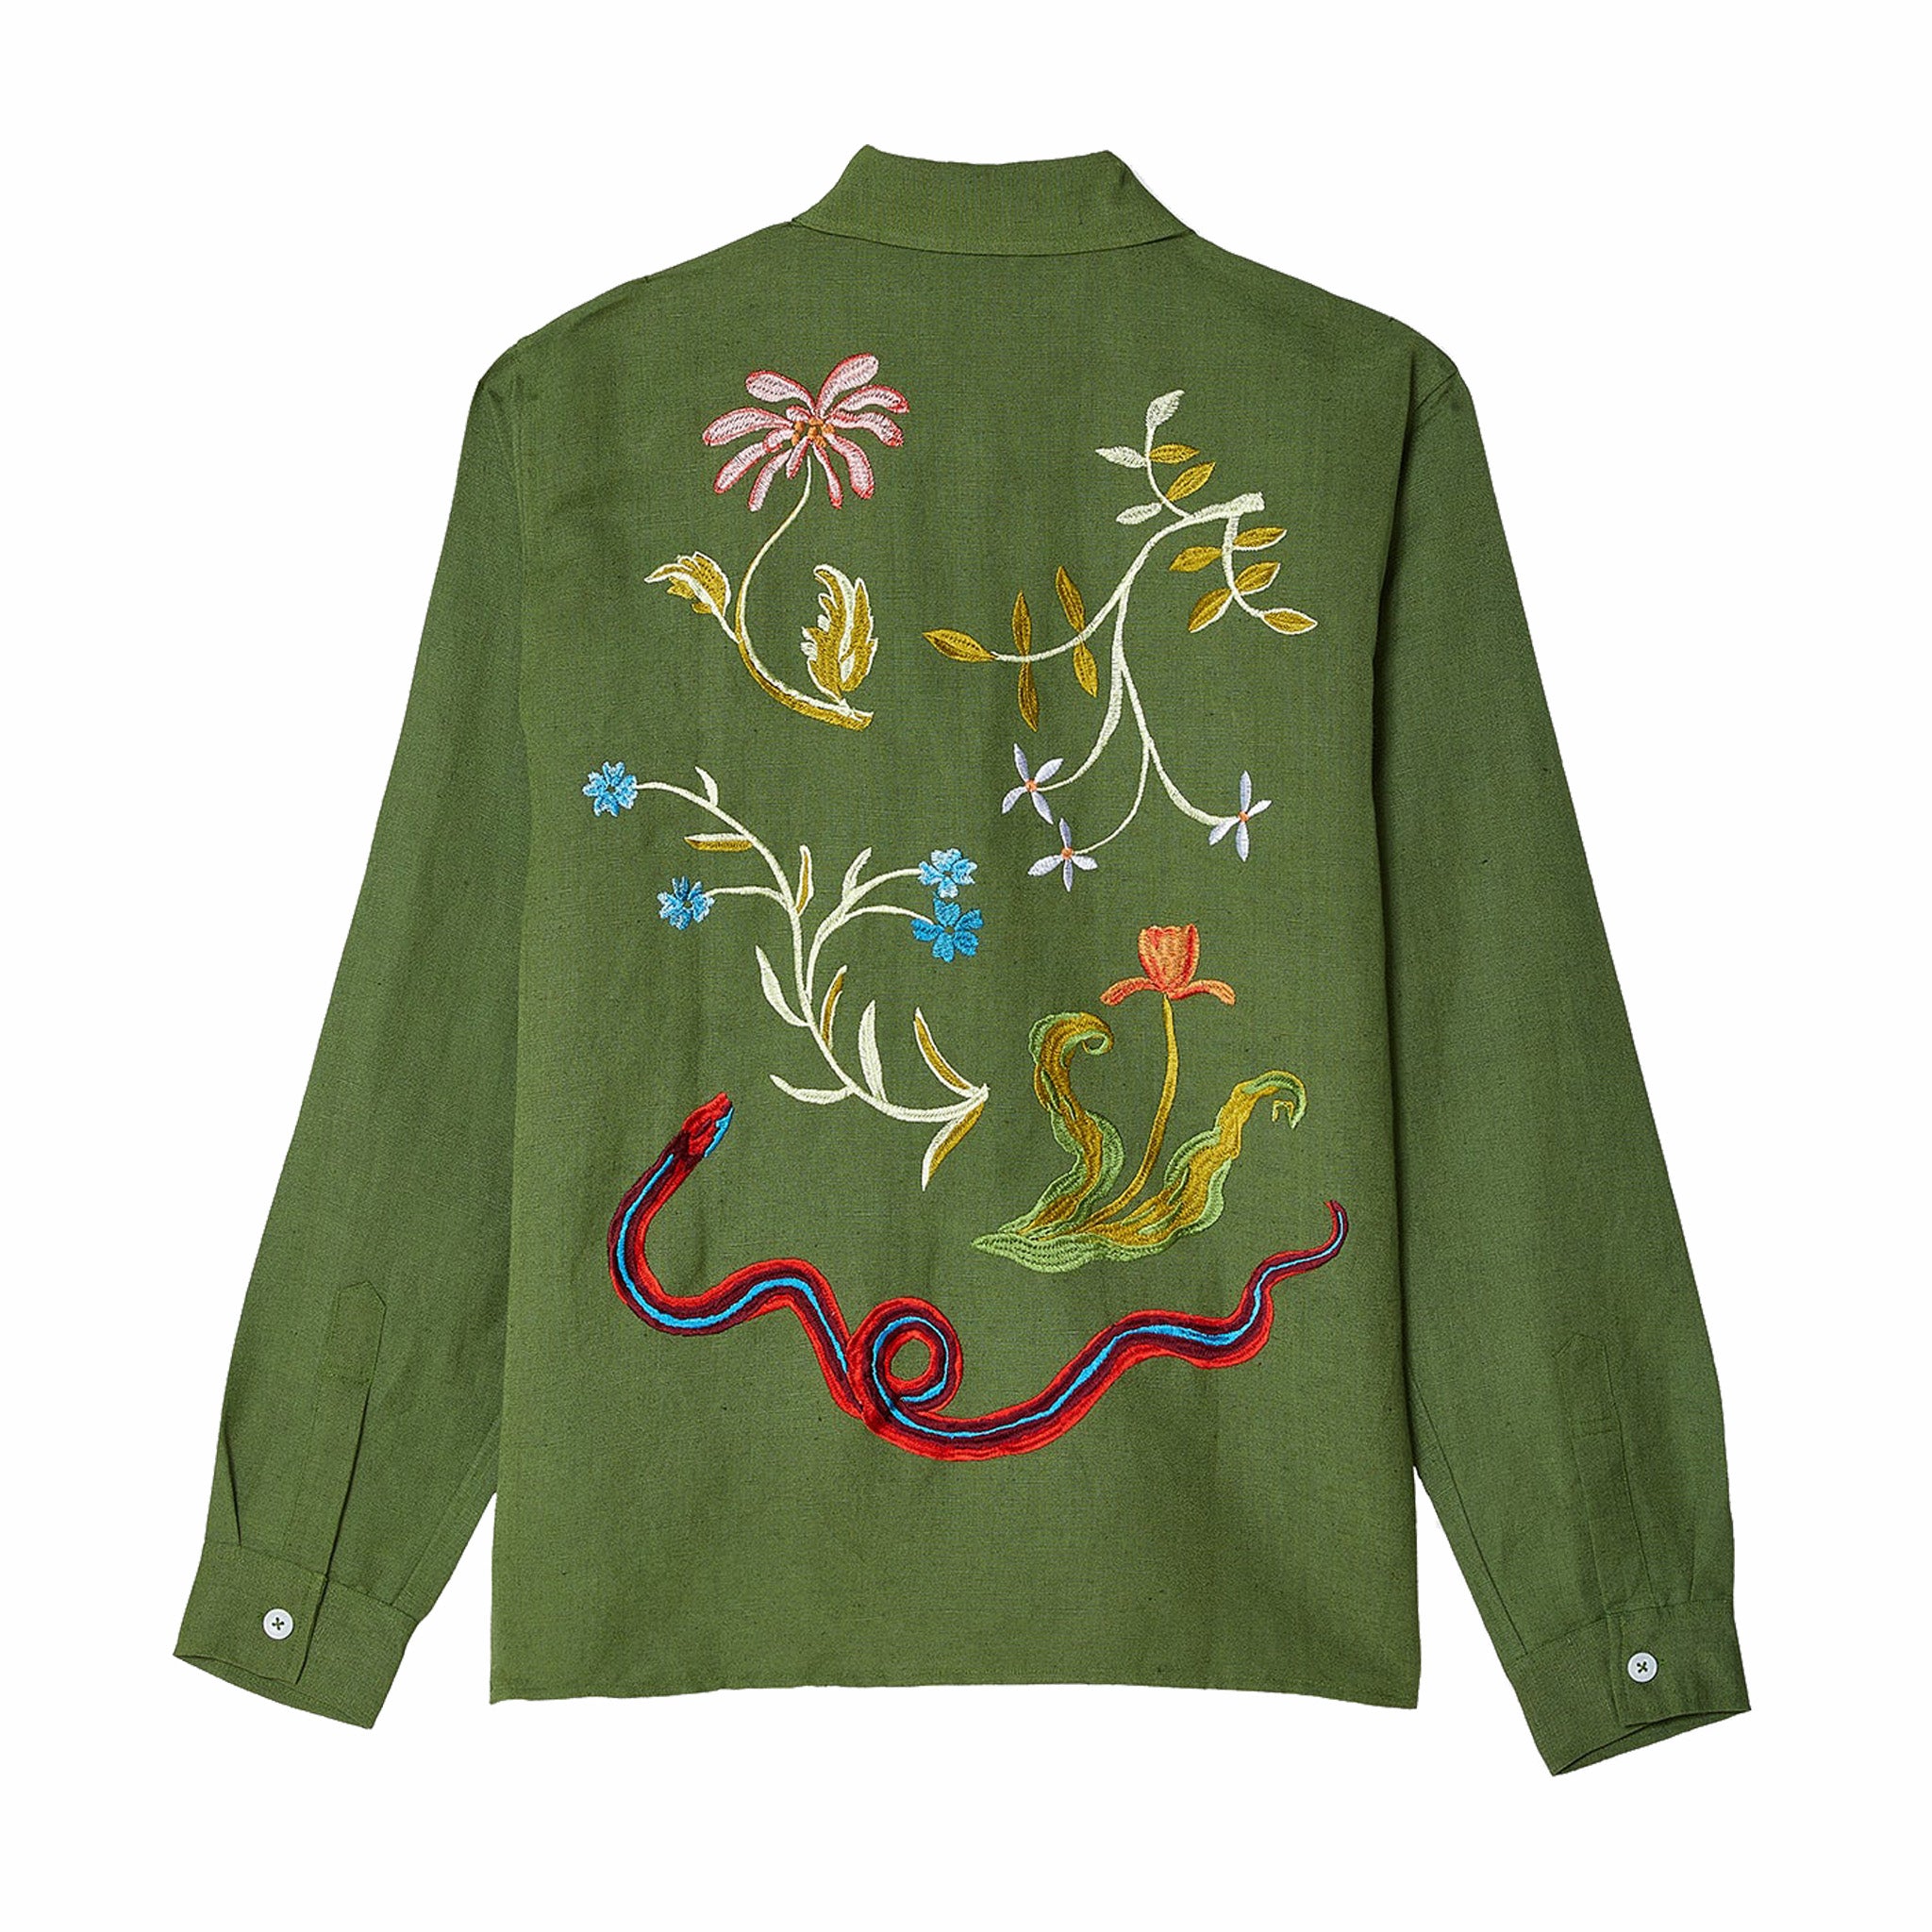 Sky High Farm Workwear Garden Embroidered Shirt (Green) - August Shop